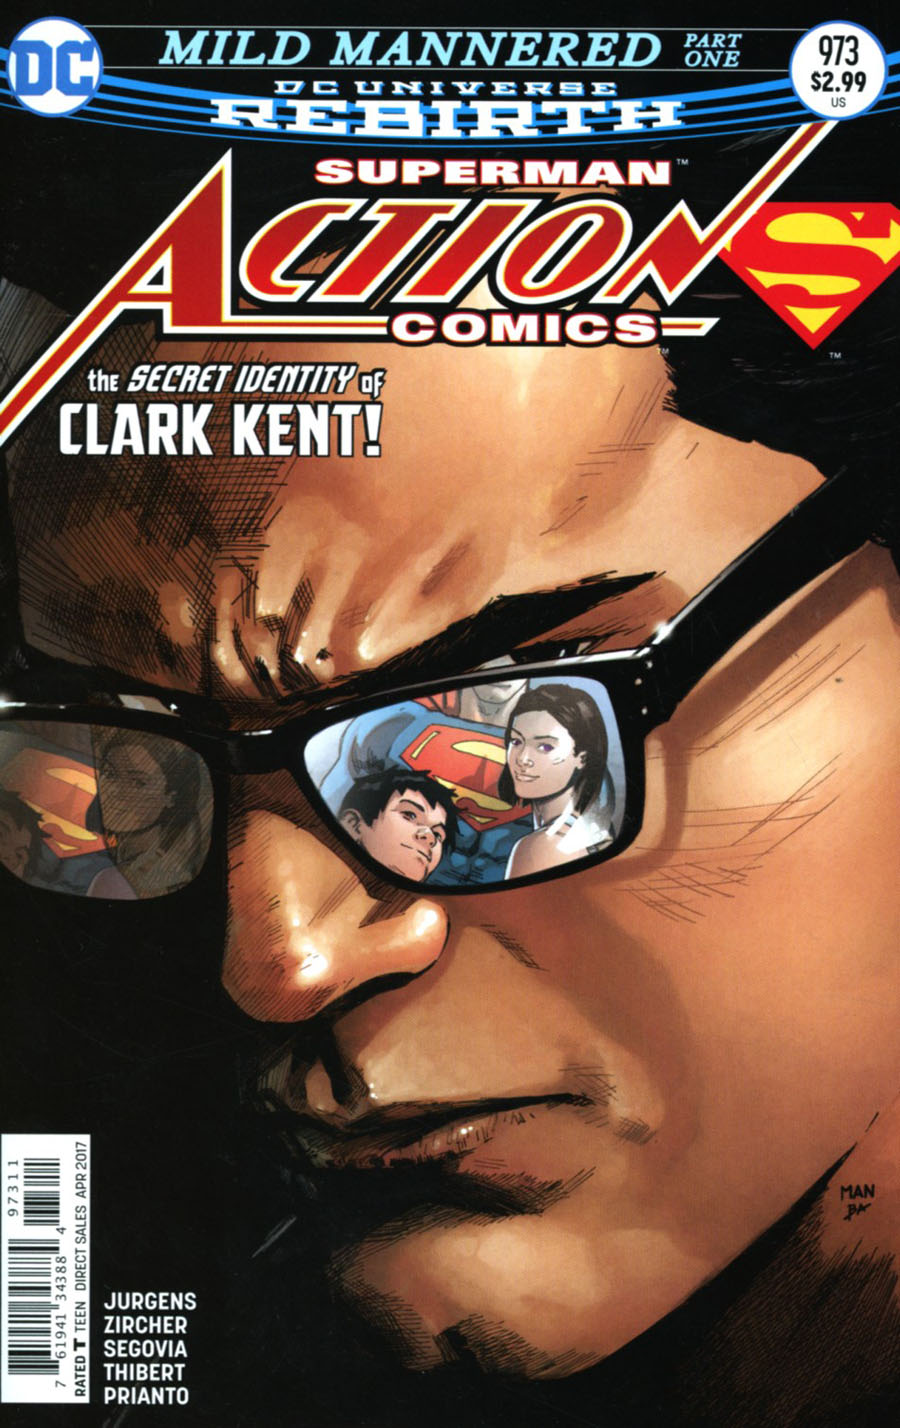 Action Comics Vol 2 #973 Cover A Regular Clay Mann Cover